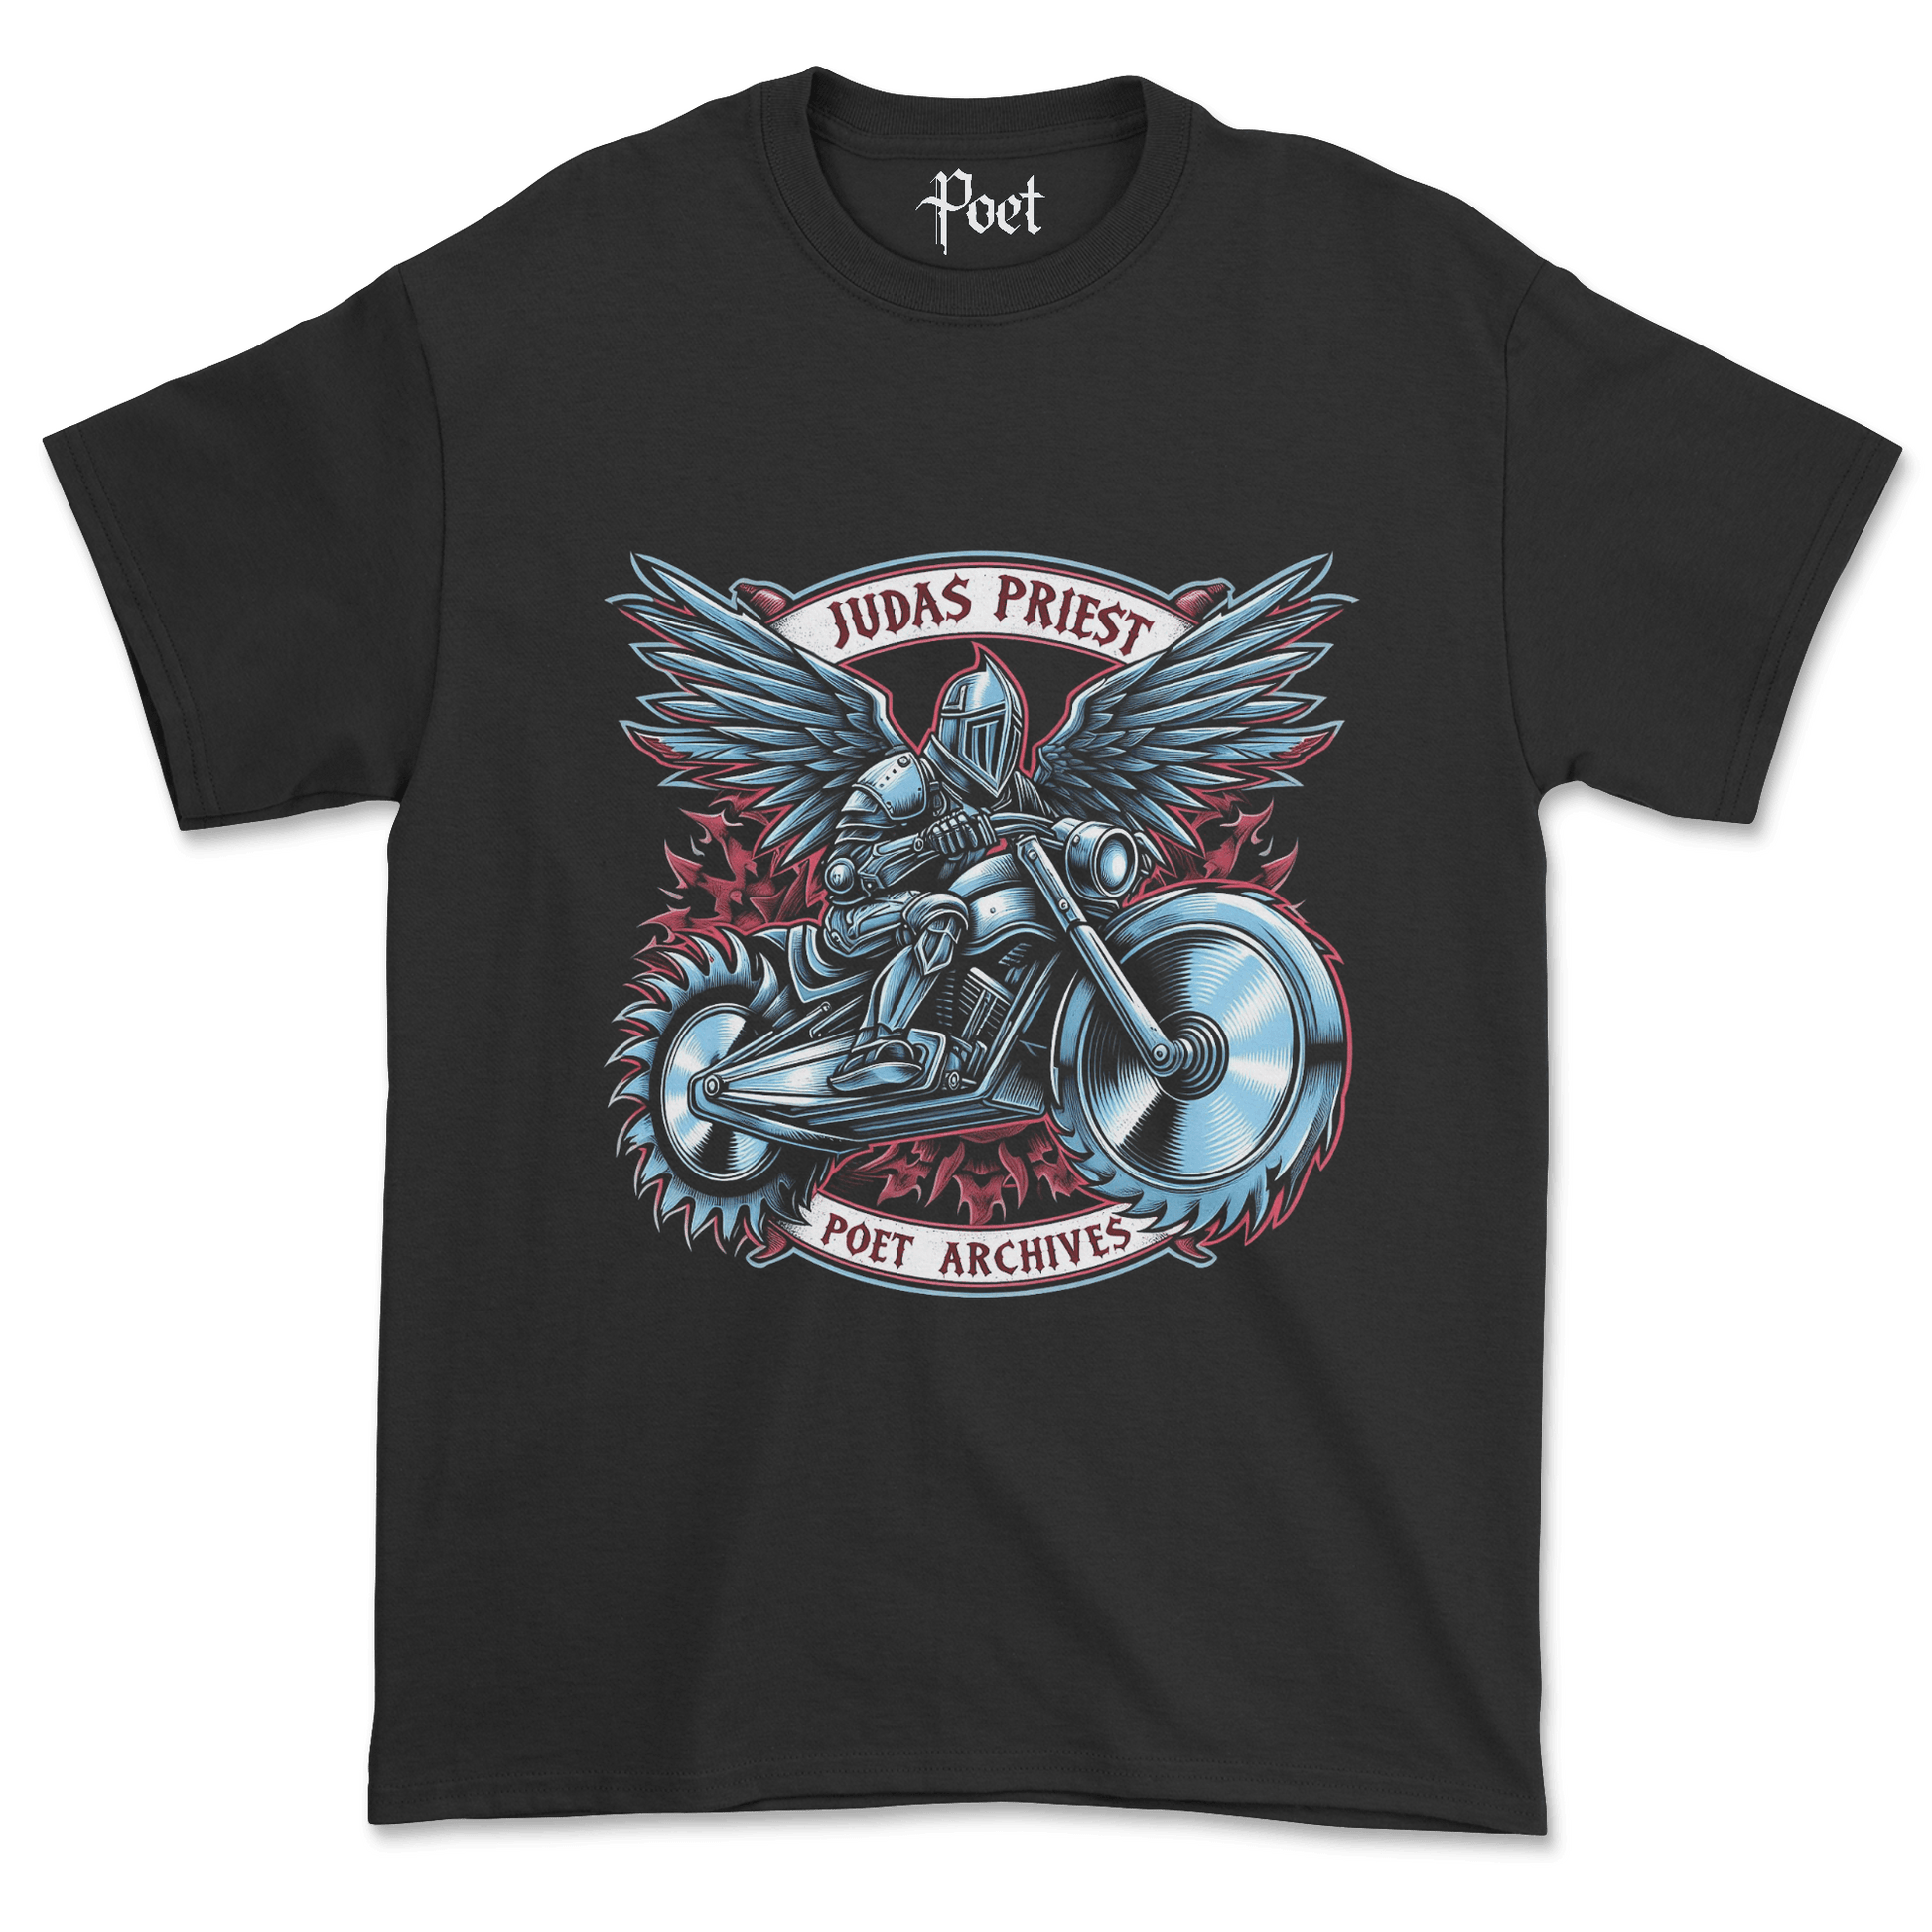 Judas Priest T-Shirt - Poet Archives